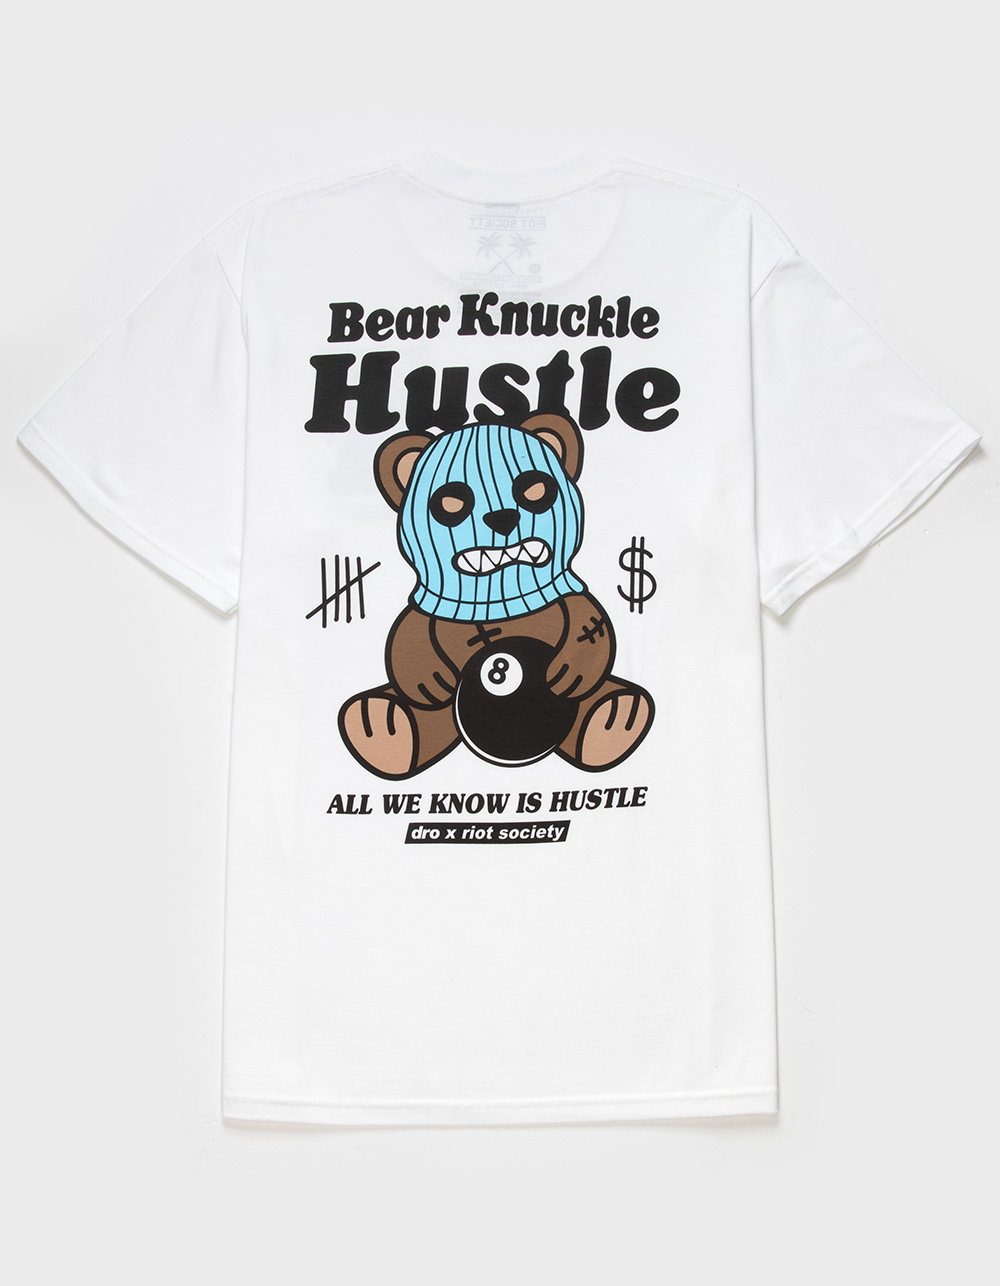 RIOT SOCIETY x Dro Bear Knuckle Hustle Mens Tee